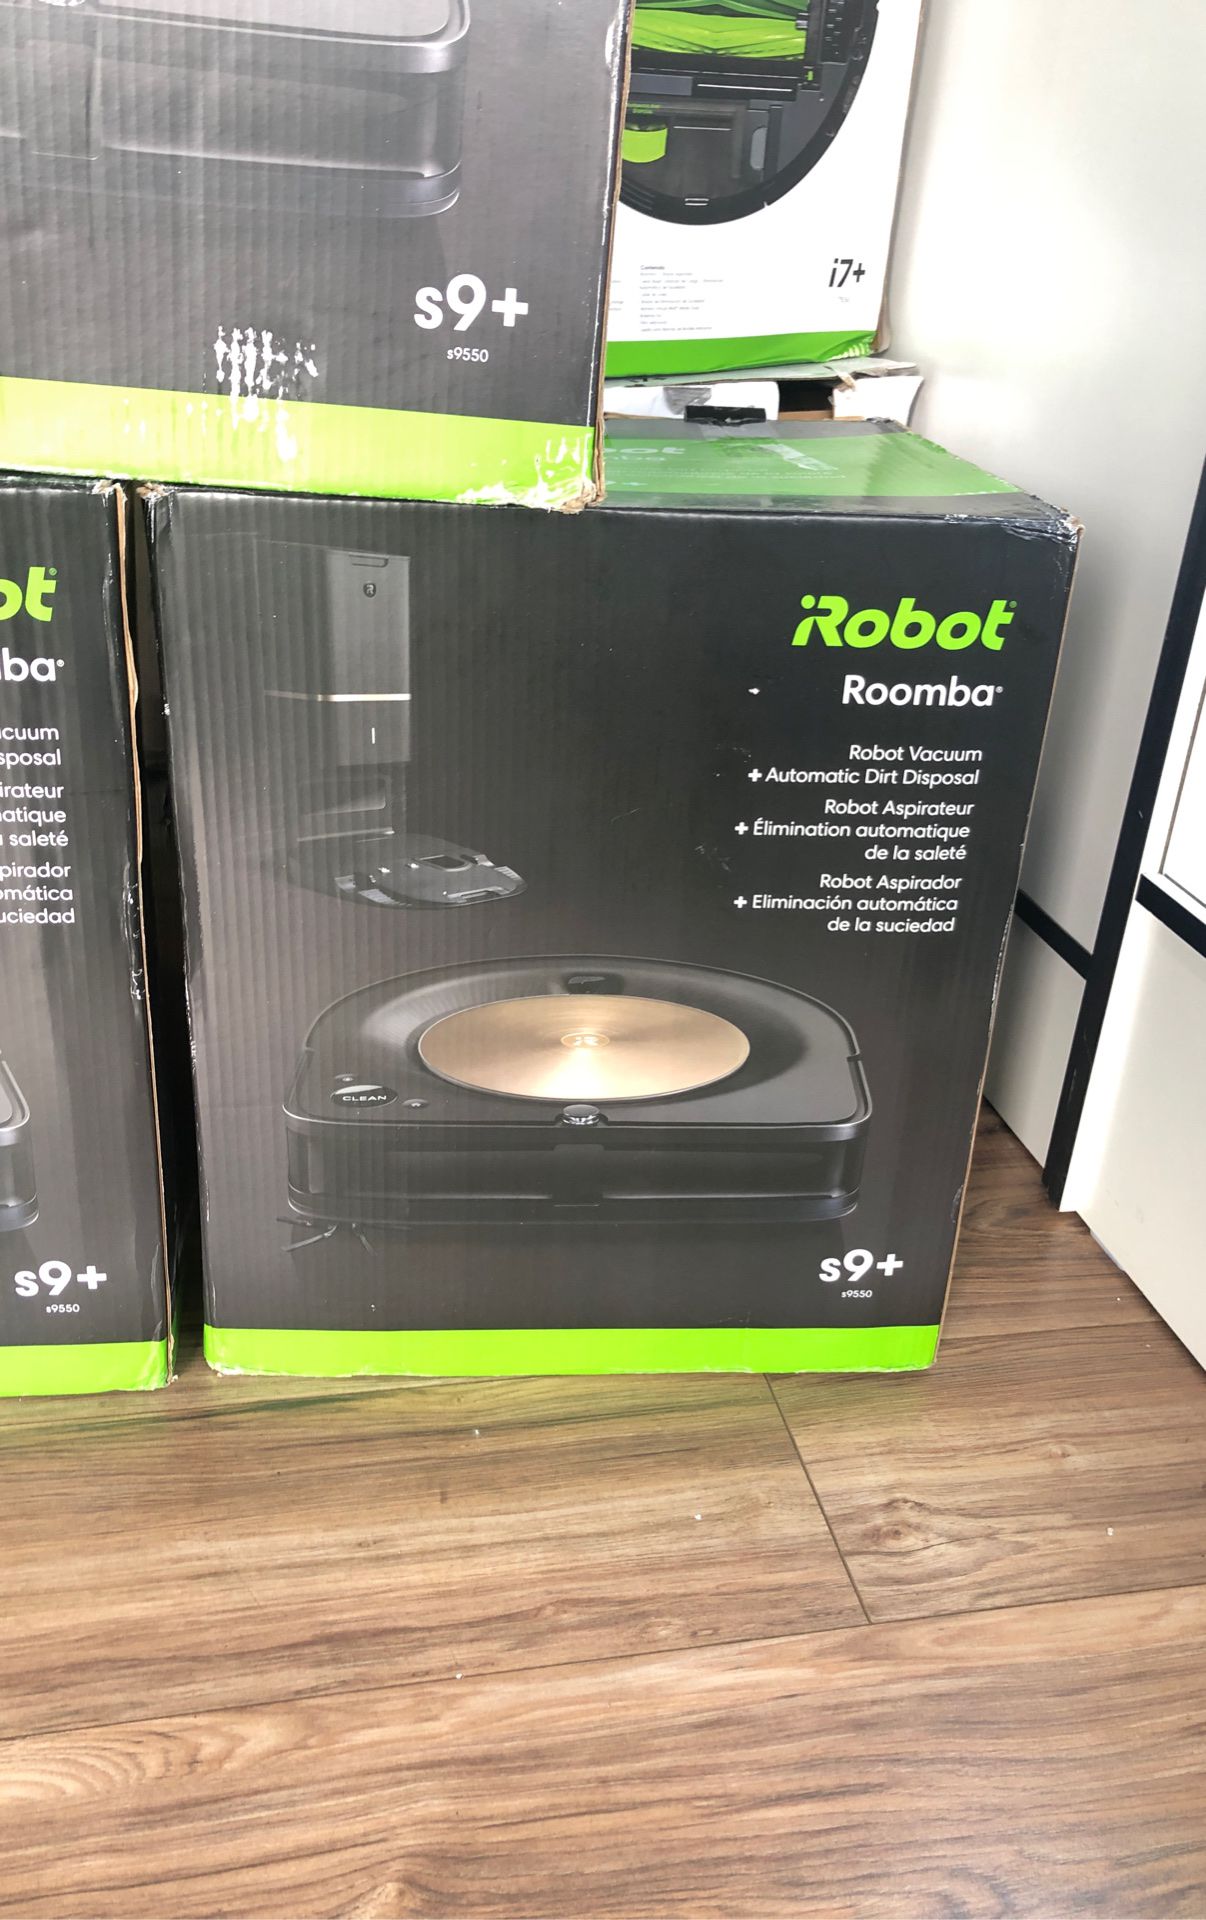 iRobot Roomba s9+ (9550) Robot Vacuum with Automatic Dirt Disposal